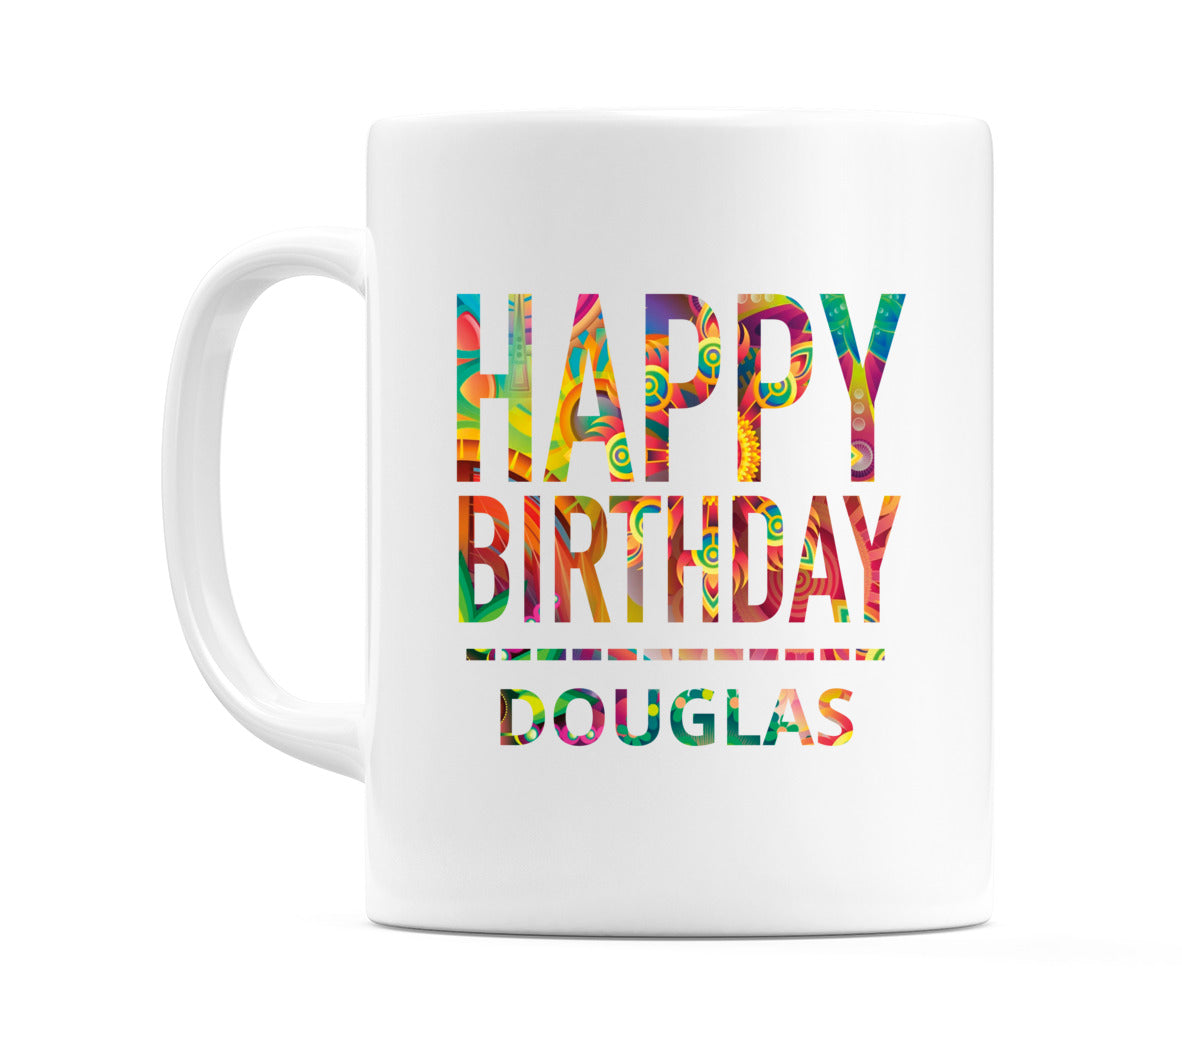 Happy Birthday Douglas (Tie Dye Effect) Mug Cup by WeDoMugs